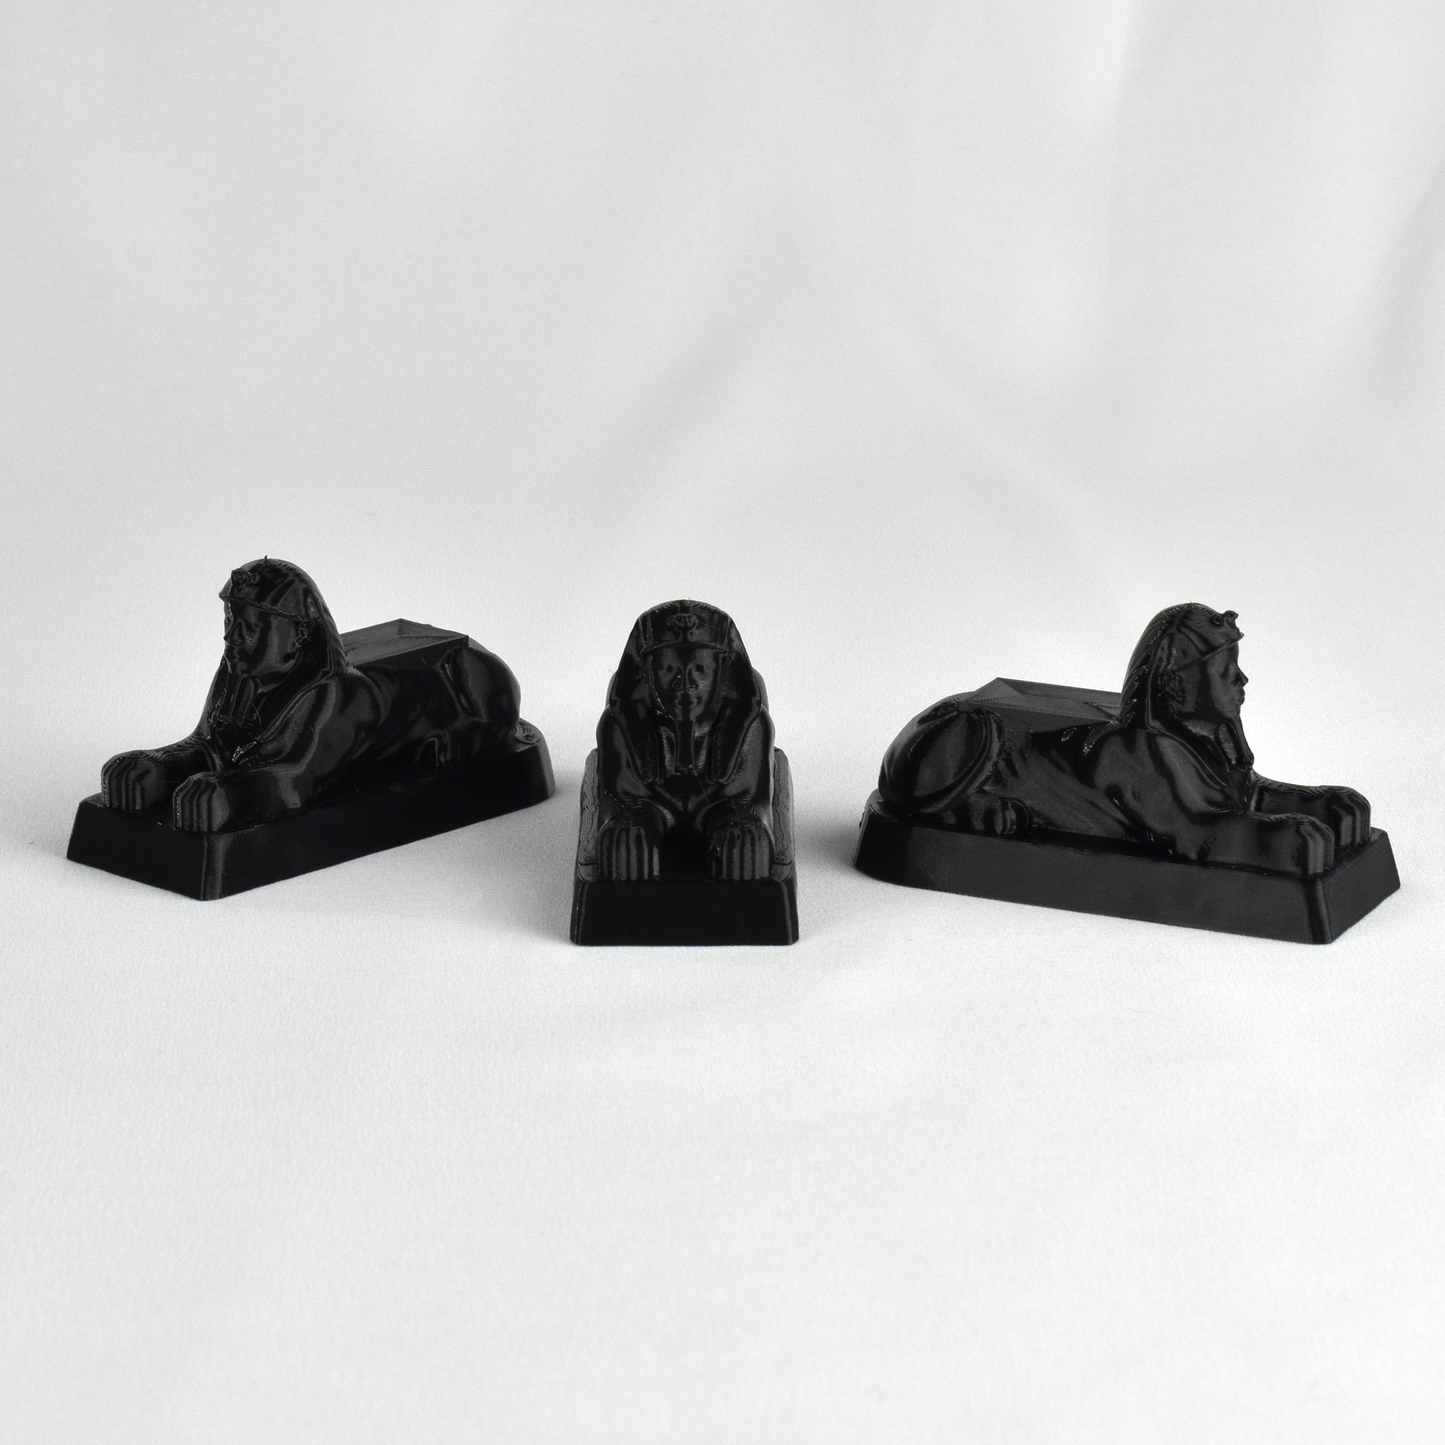 Sphinx Decorative and Durable Planter Risers, Black